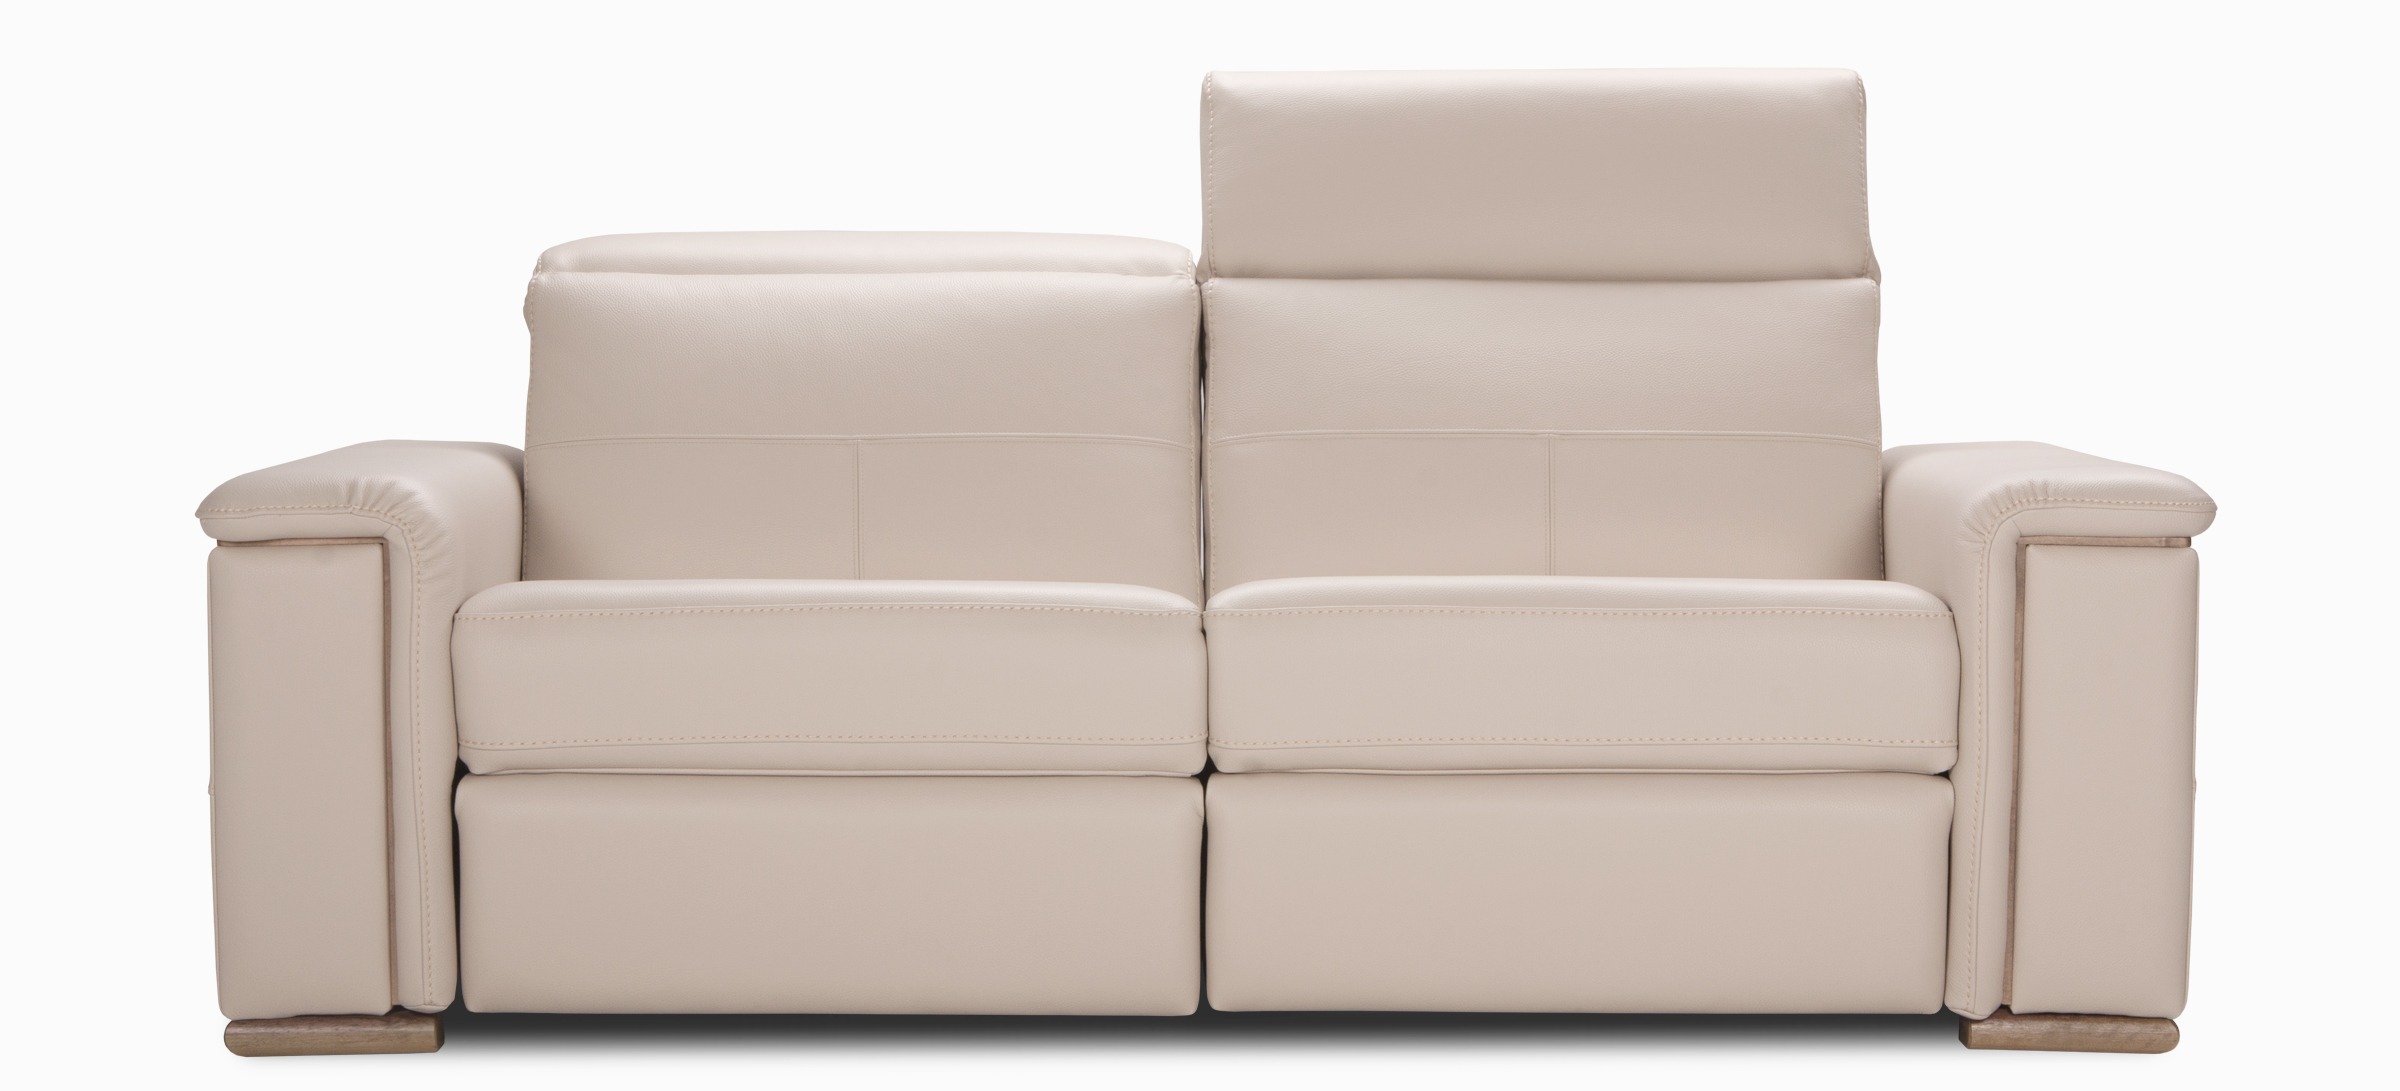 Melbourne sofa apt illusion gregre front1